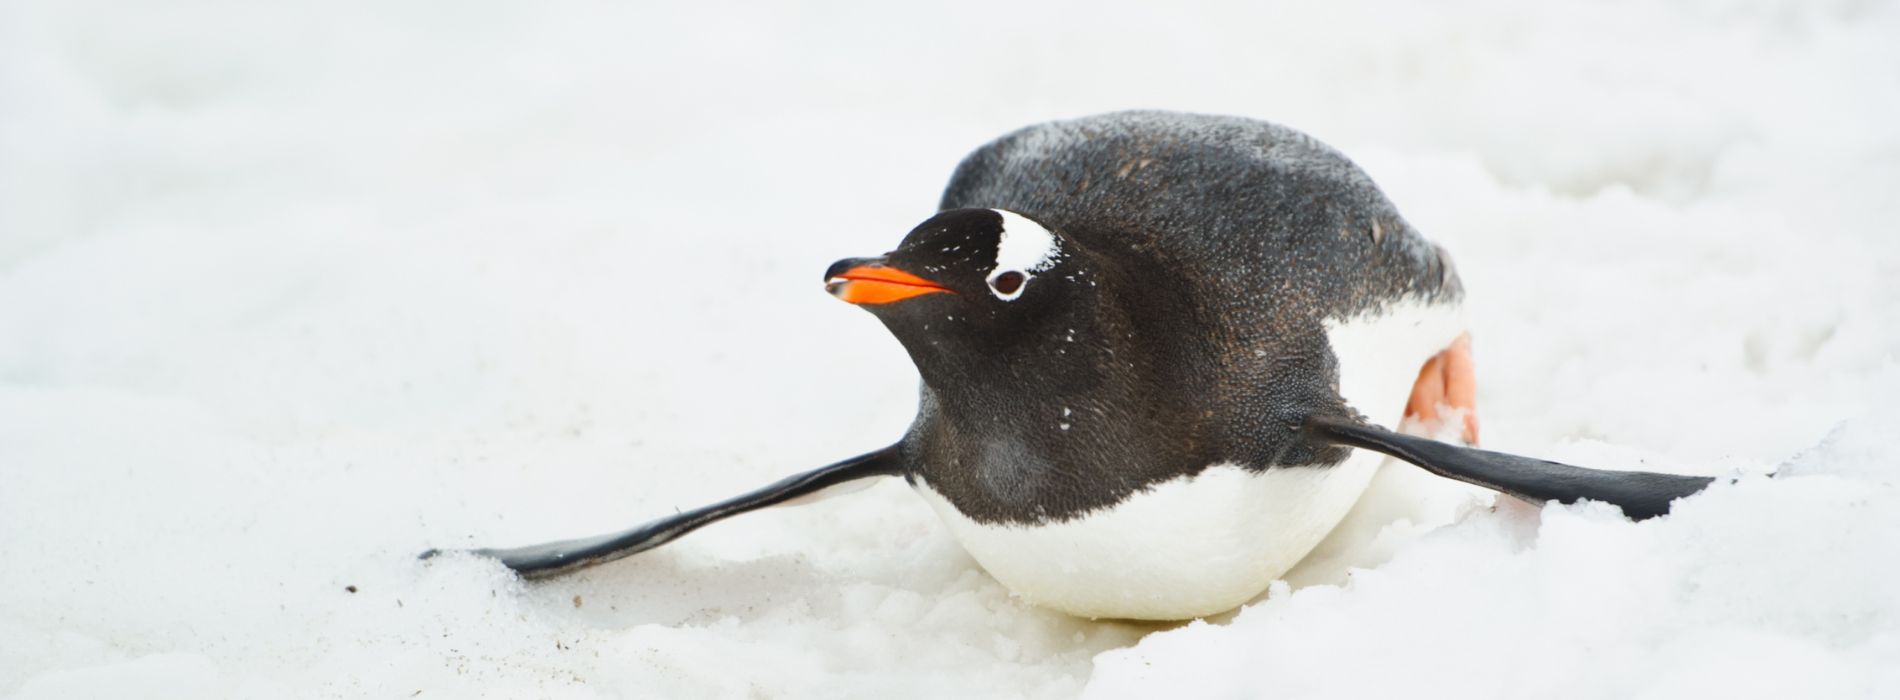 Are penguins rare?